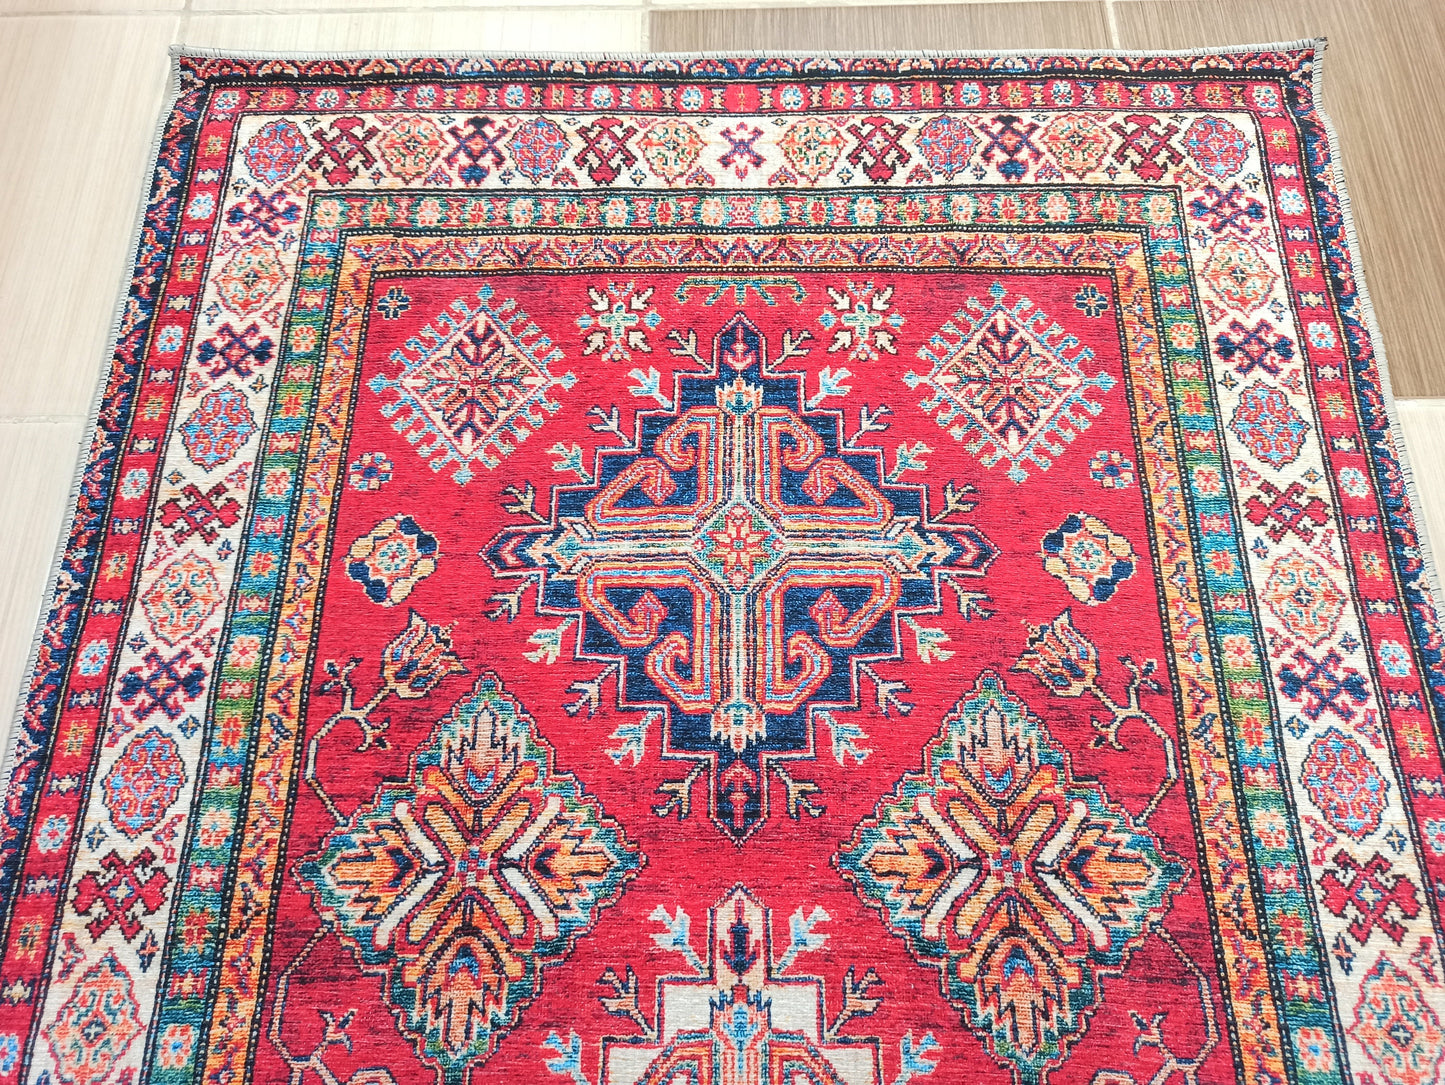 SADA Runner | Turkish rug, Red Vintage Distressed look, Bohemian Geometric Mid-century Home decoration, Medallion design floral carpet